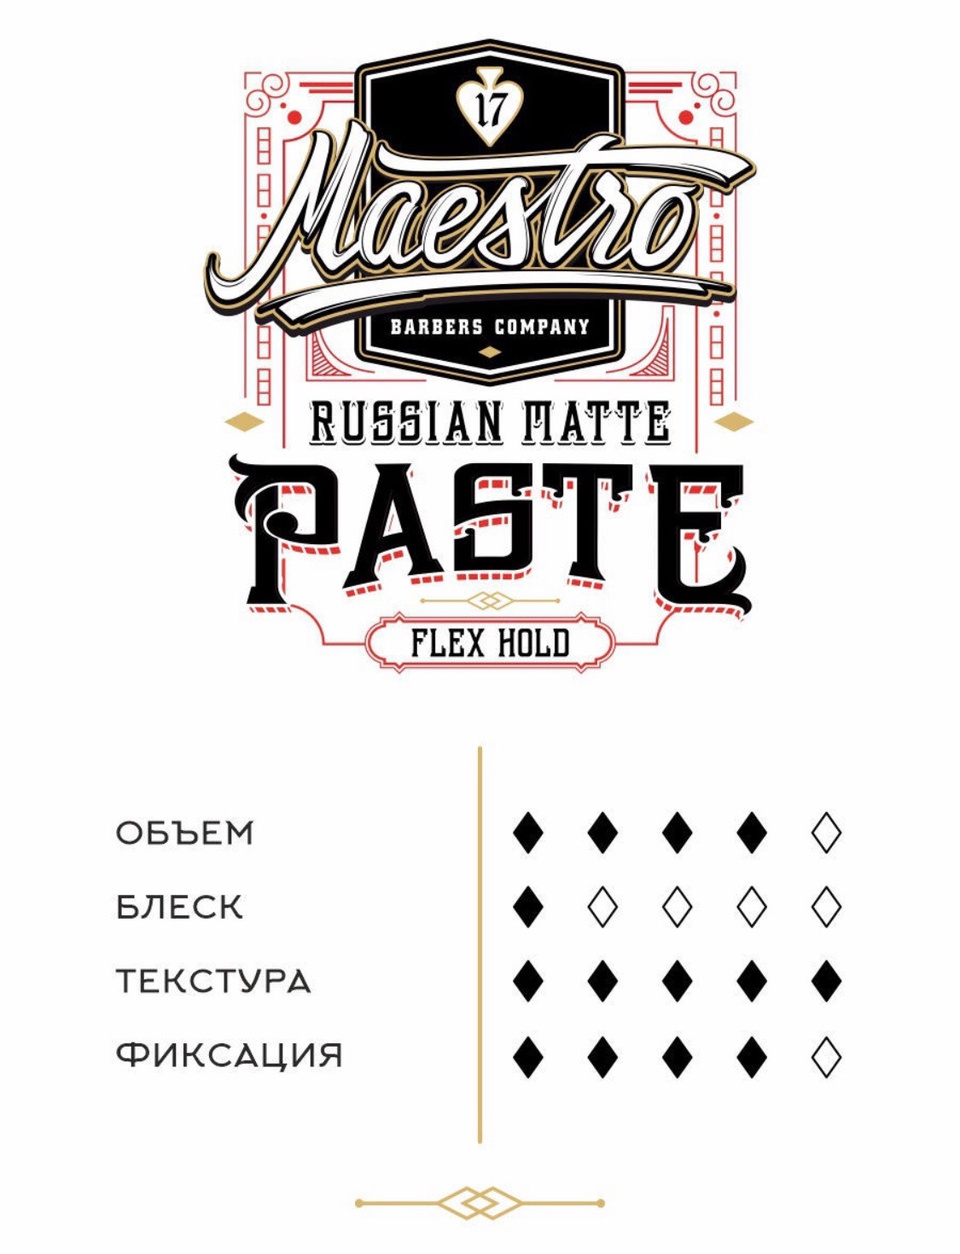 Maestro - Russian Matte Paste, 135г - 1 200 ₽, заказать онлайн.